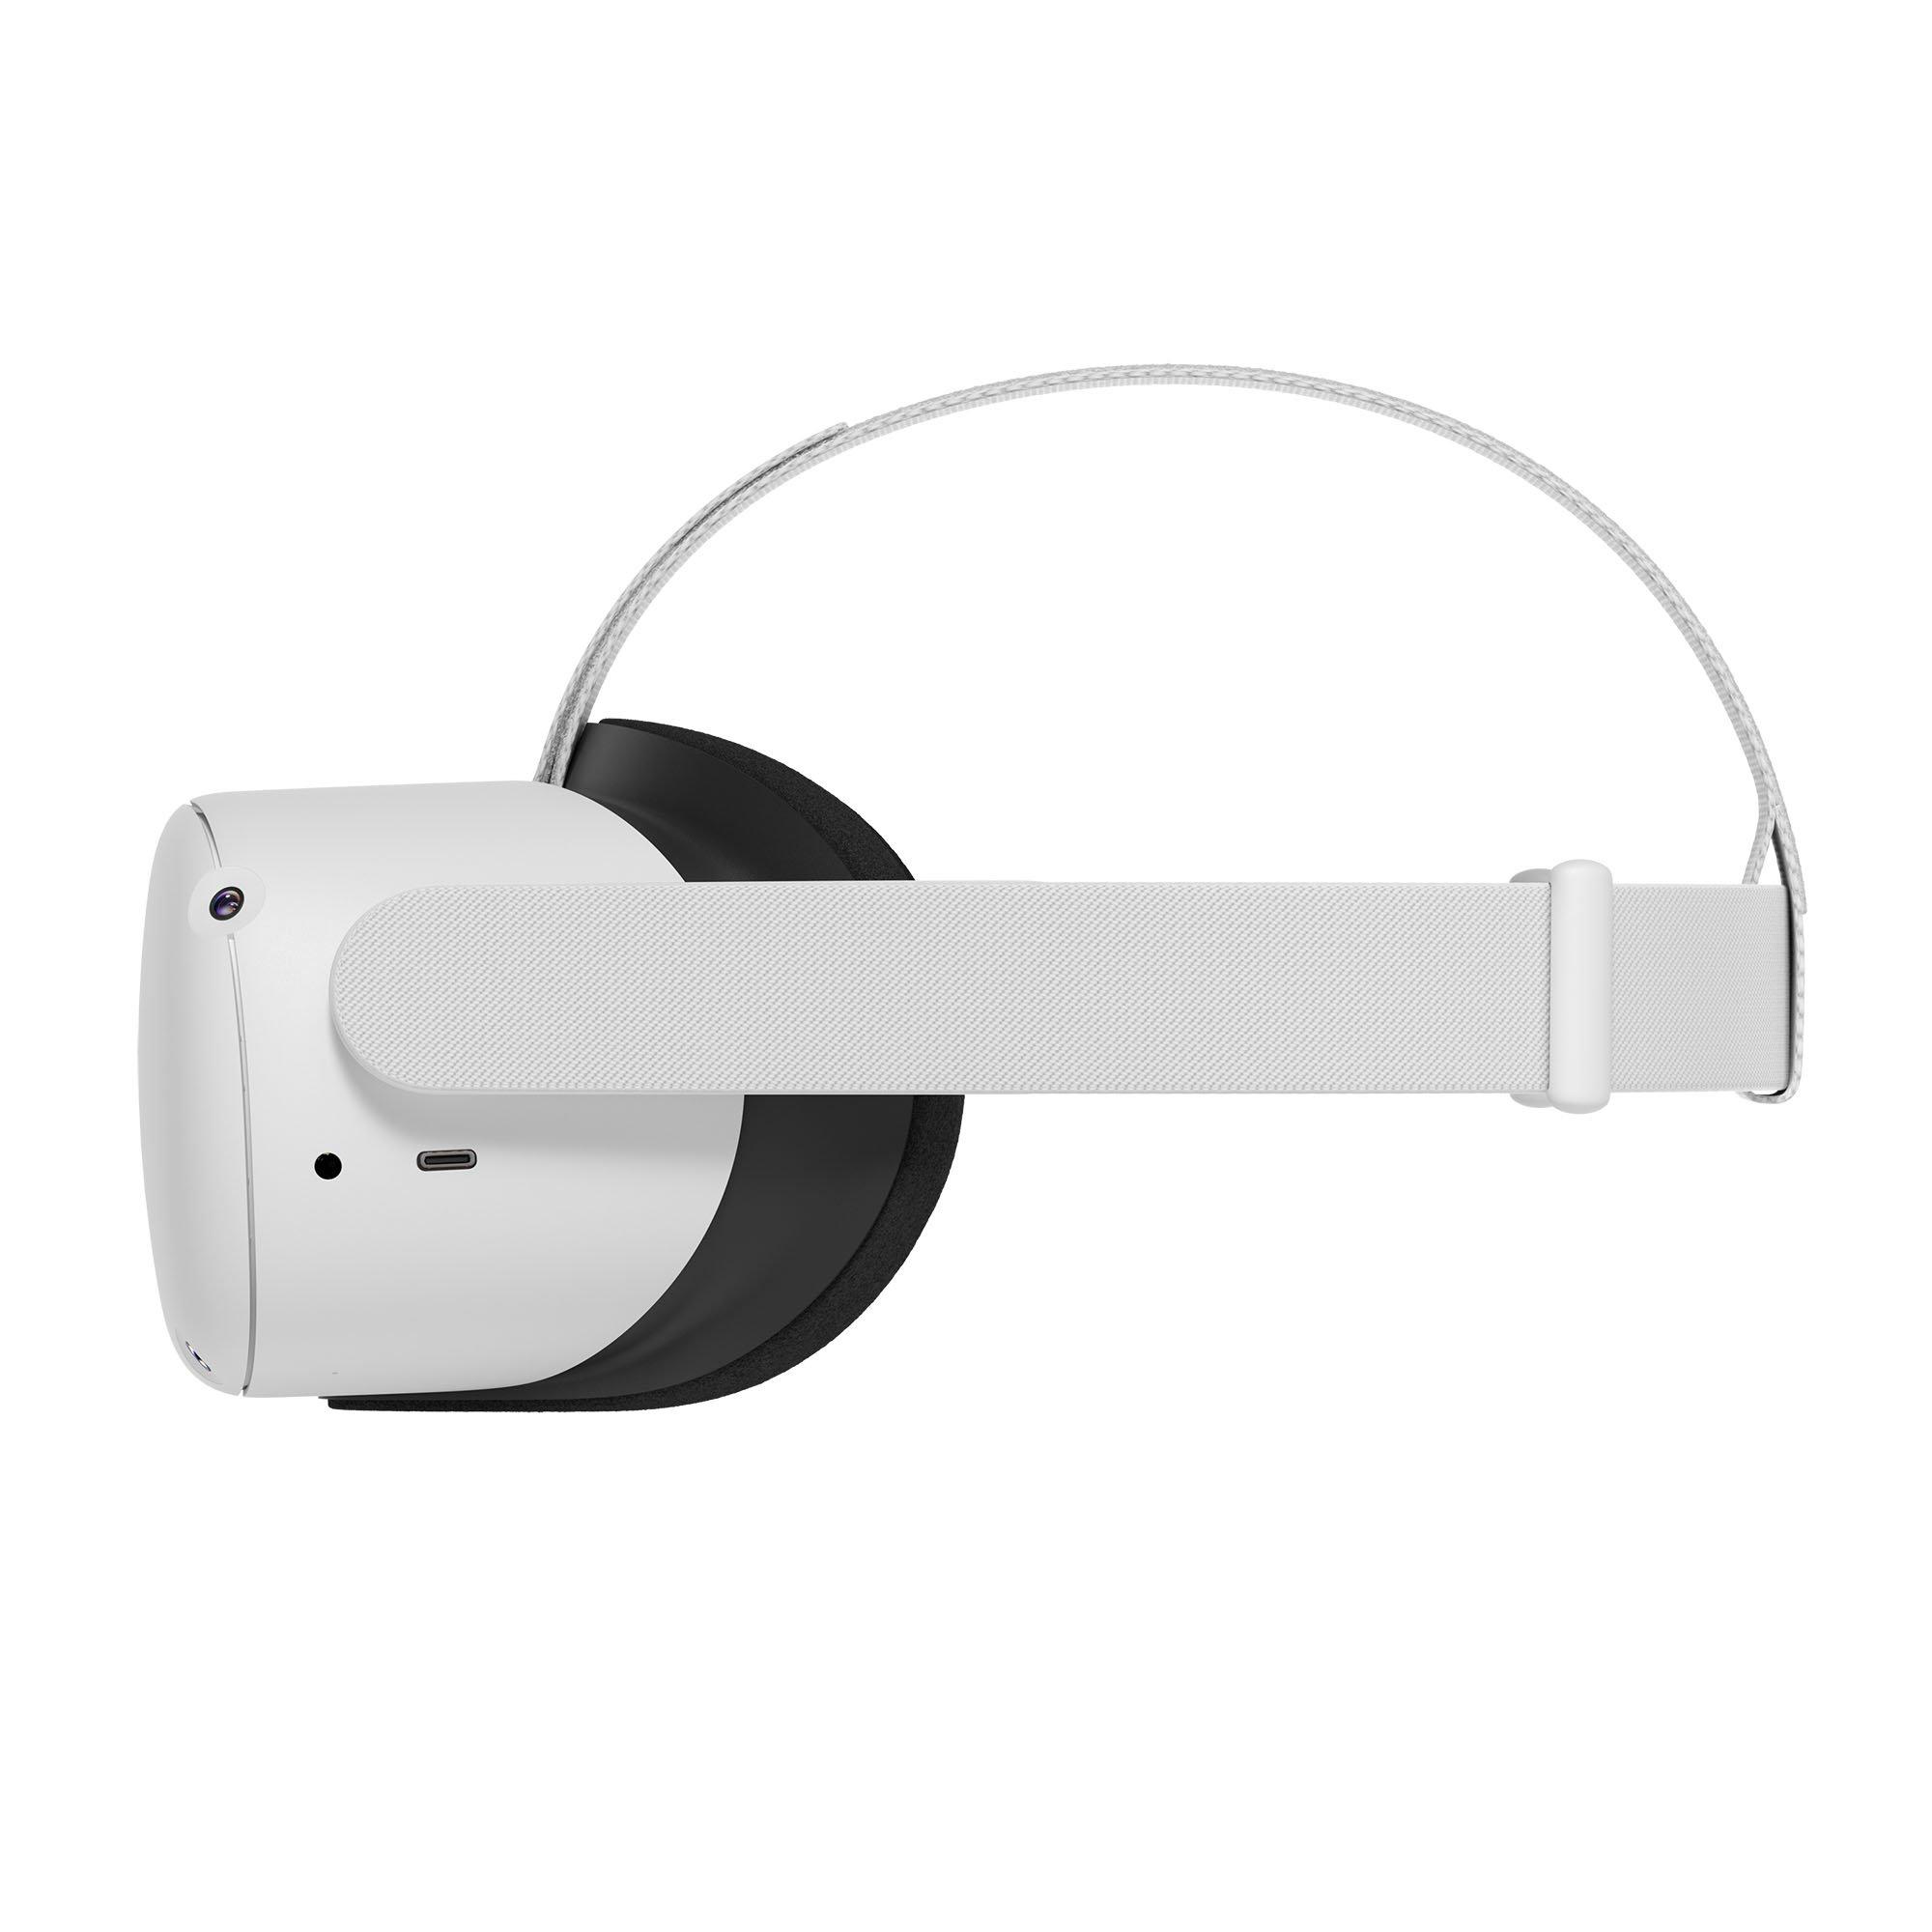 Meta Quest 2 Virtual Reality Headset - 256GB